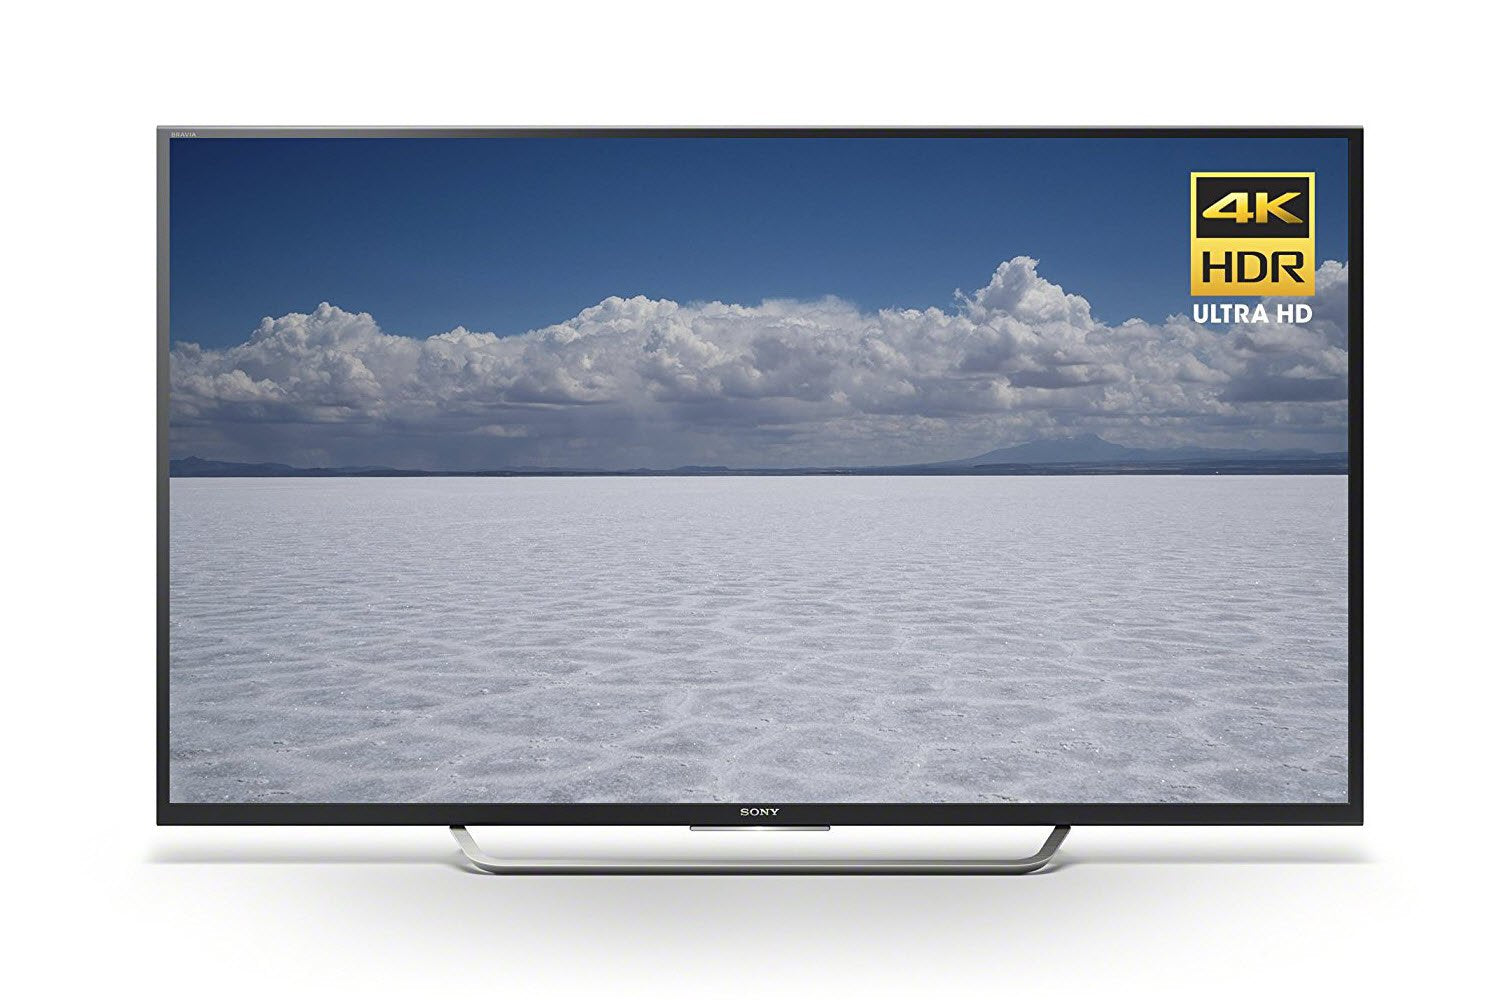 Sony XBR65X750D 65-Inch 4K Ultra HD Smart LED TV (2016 Model), Works with Alexa